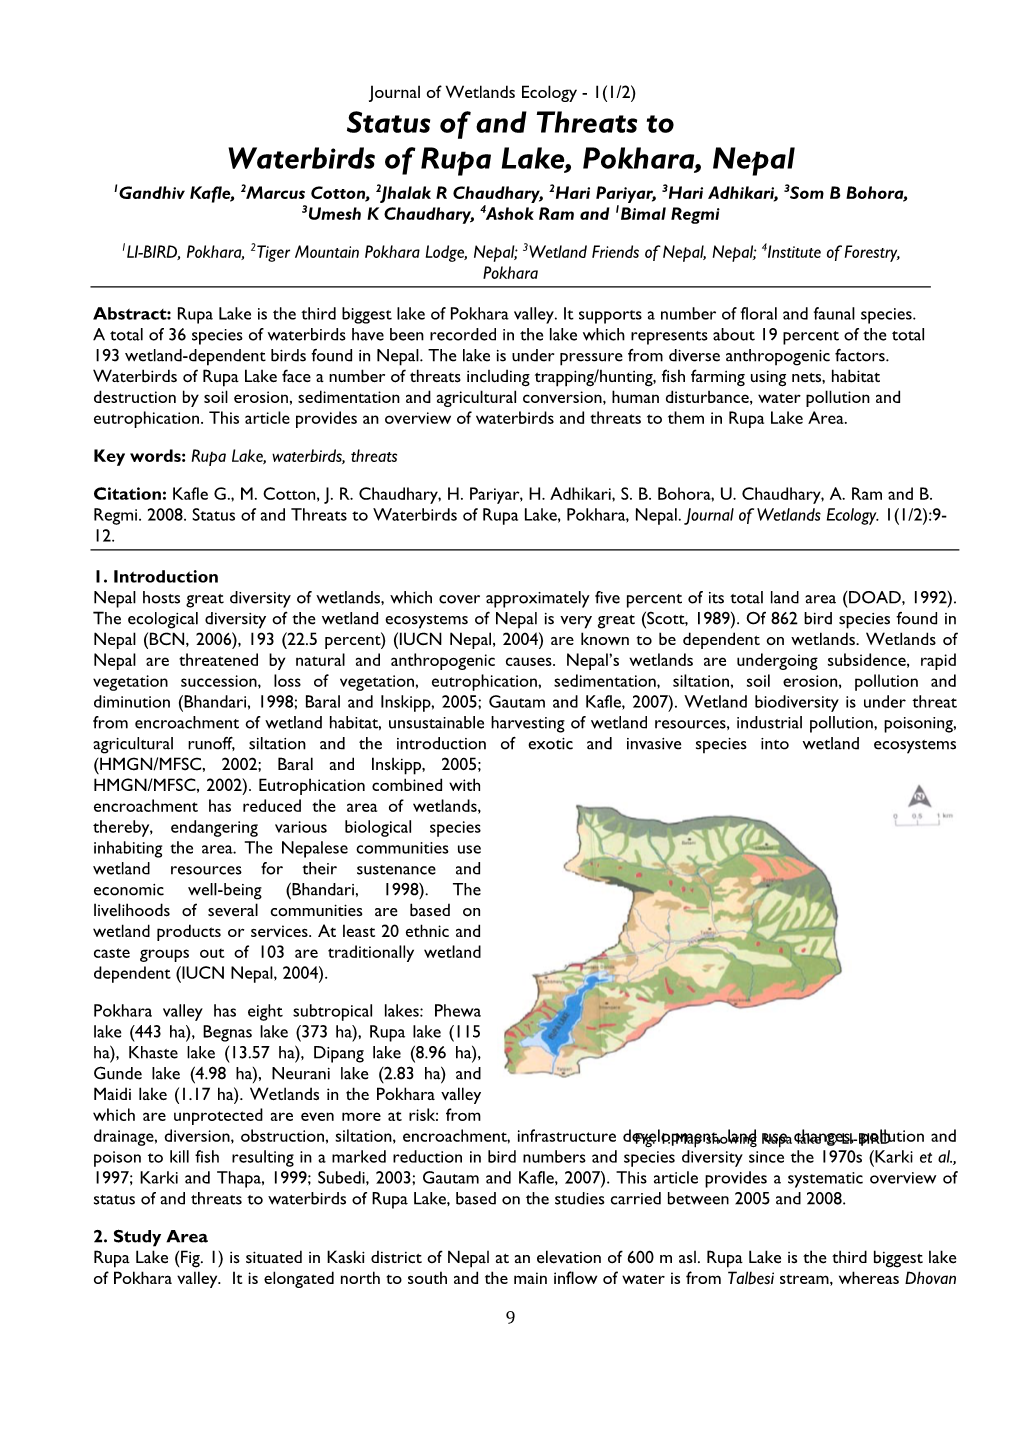 Status of and Threats to Waterbirds of Rupa Lake, Pokhara, Nepal